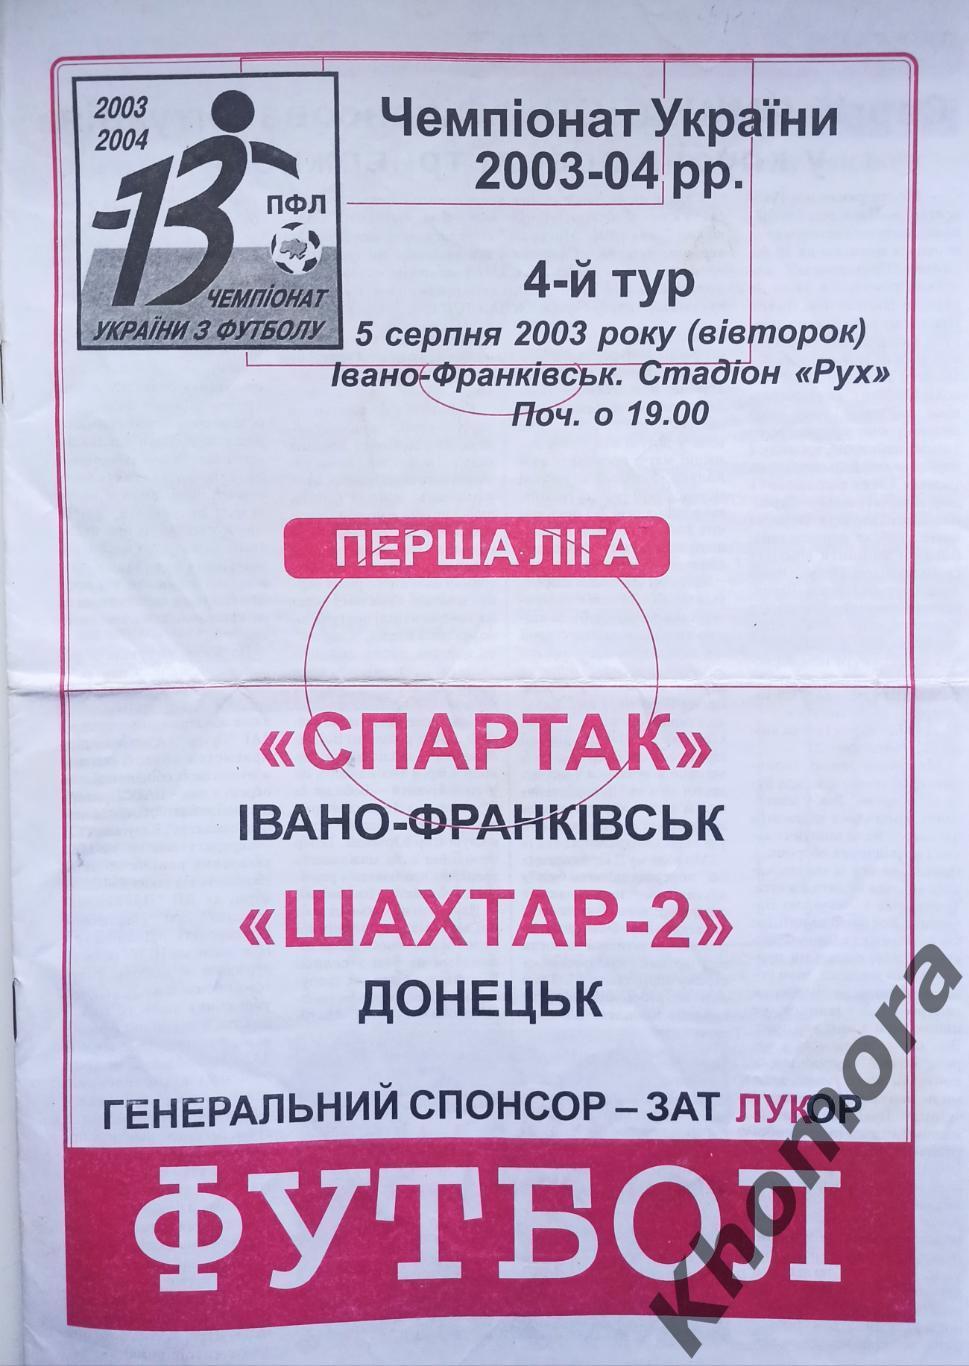 Спартак (Ивано-Франковск) - Шахтер-2 (Донецк) 05.08.2003 - официал. программа